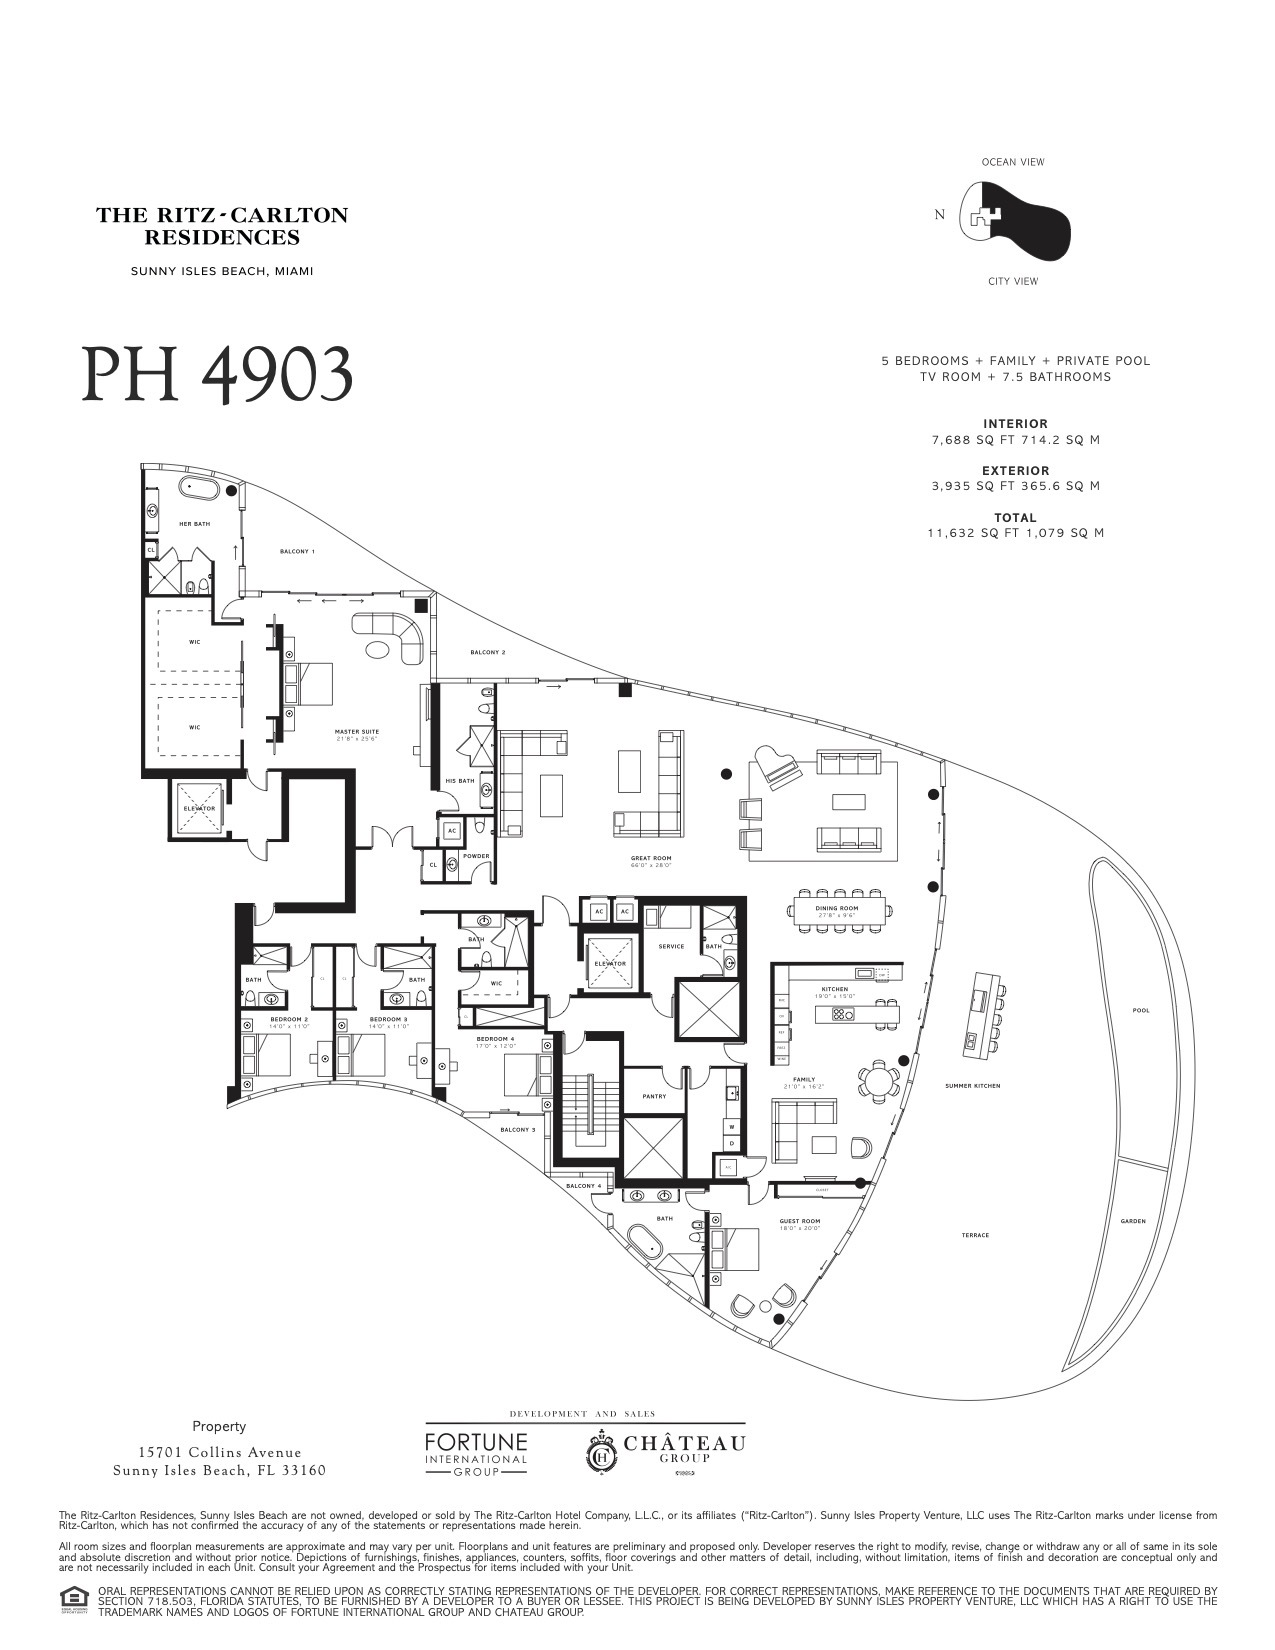 Floor Plan for Ritz-Carlton Sunny Isles Floorplans, PH 4903